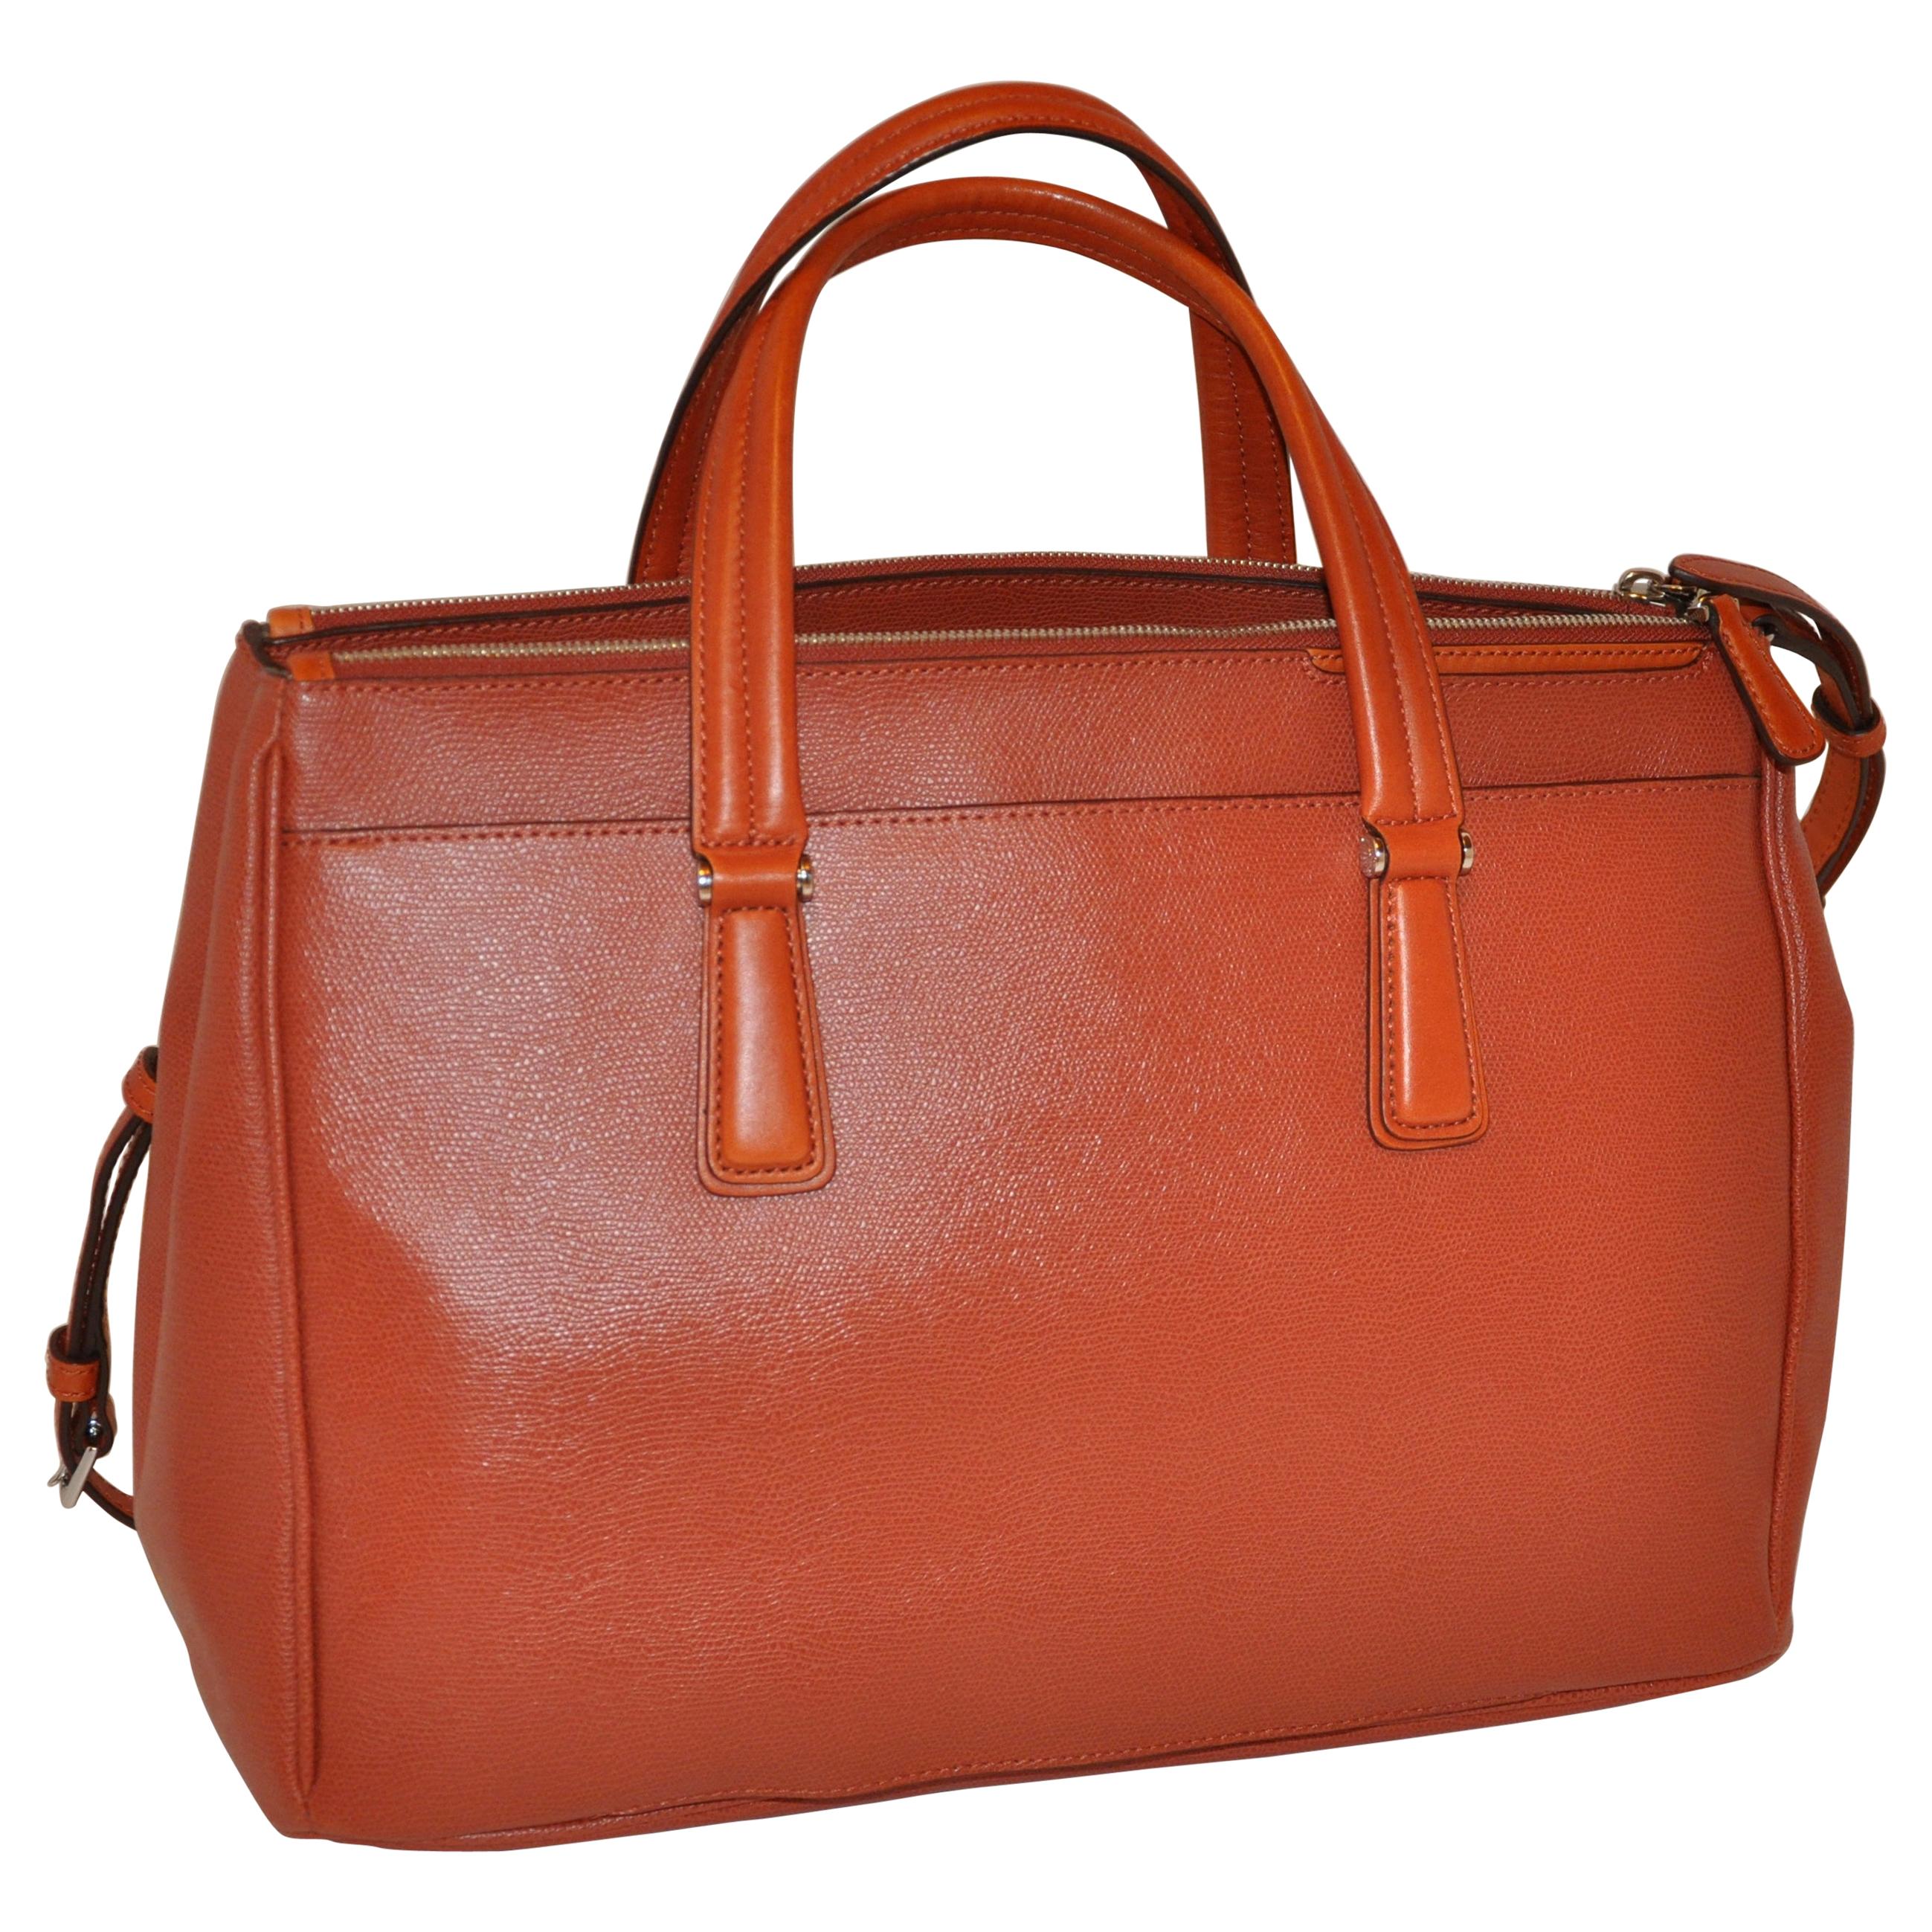 Tumi "Limited Edition" "Three-Compartment" Textured Business Travel Handbag 